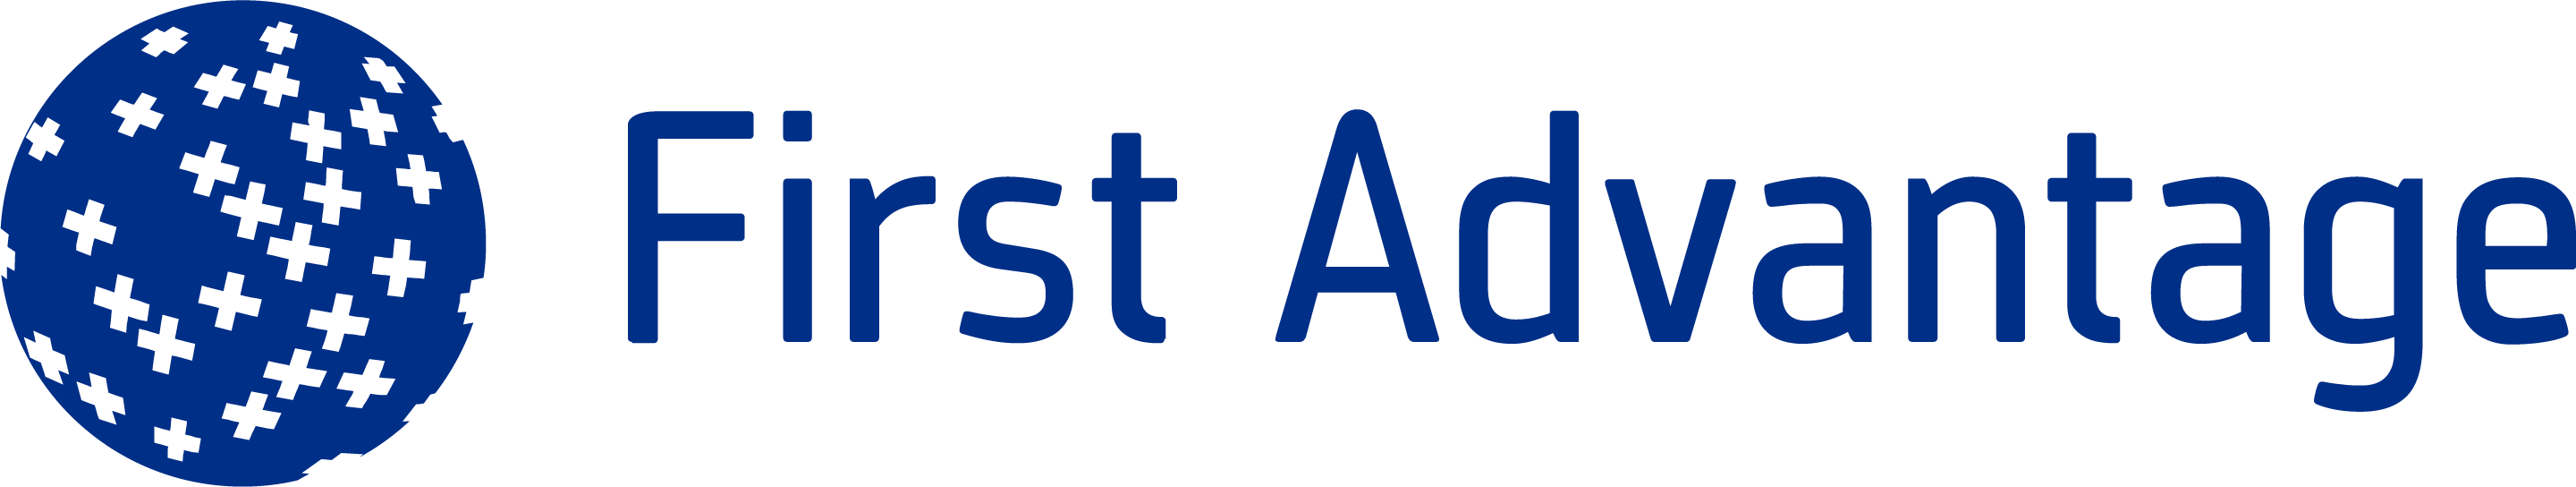 first advantage company logo